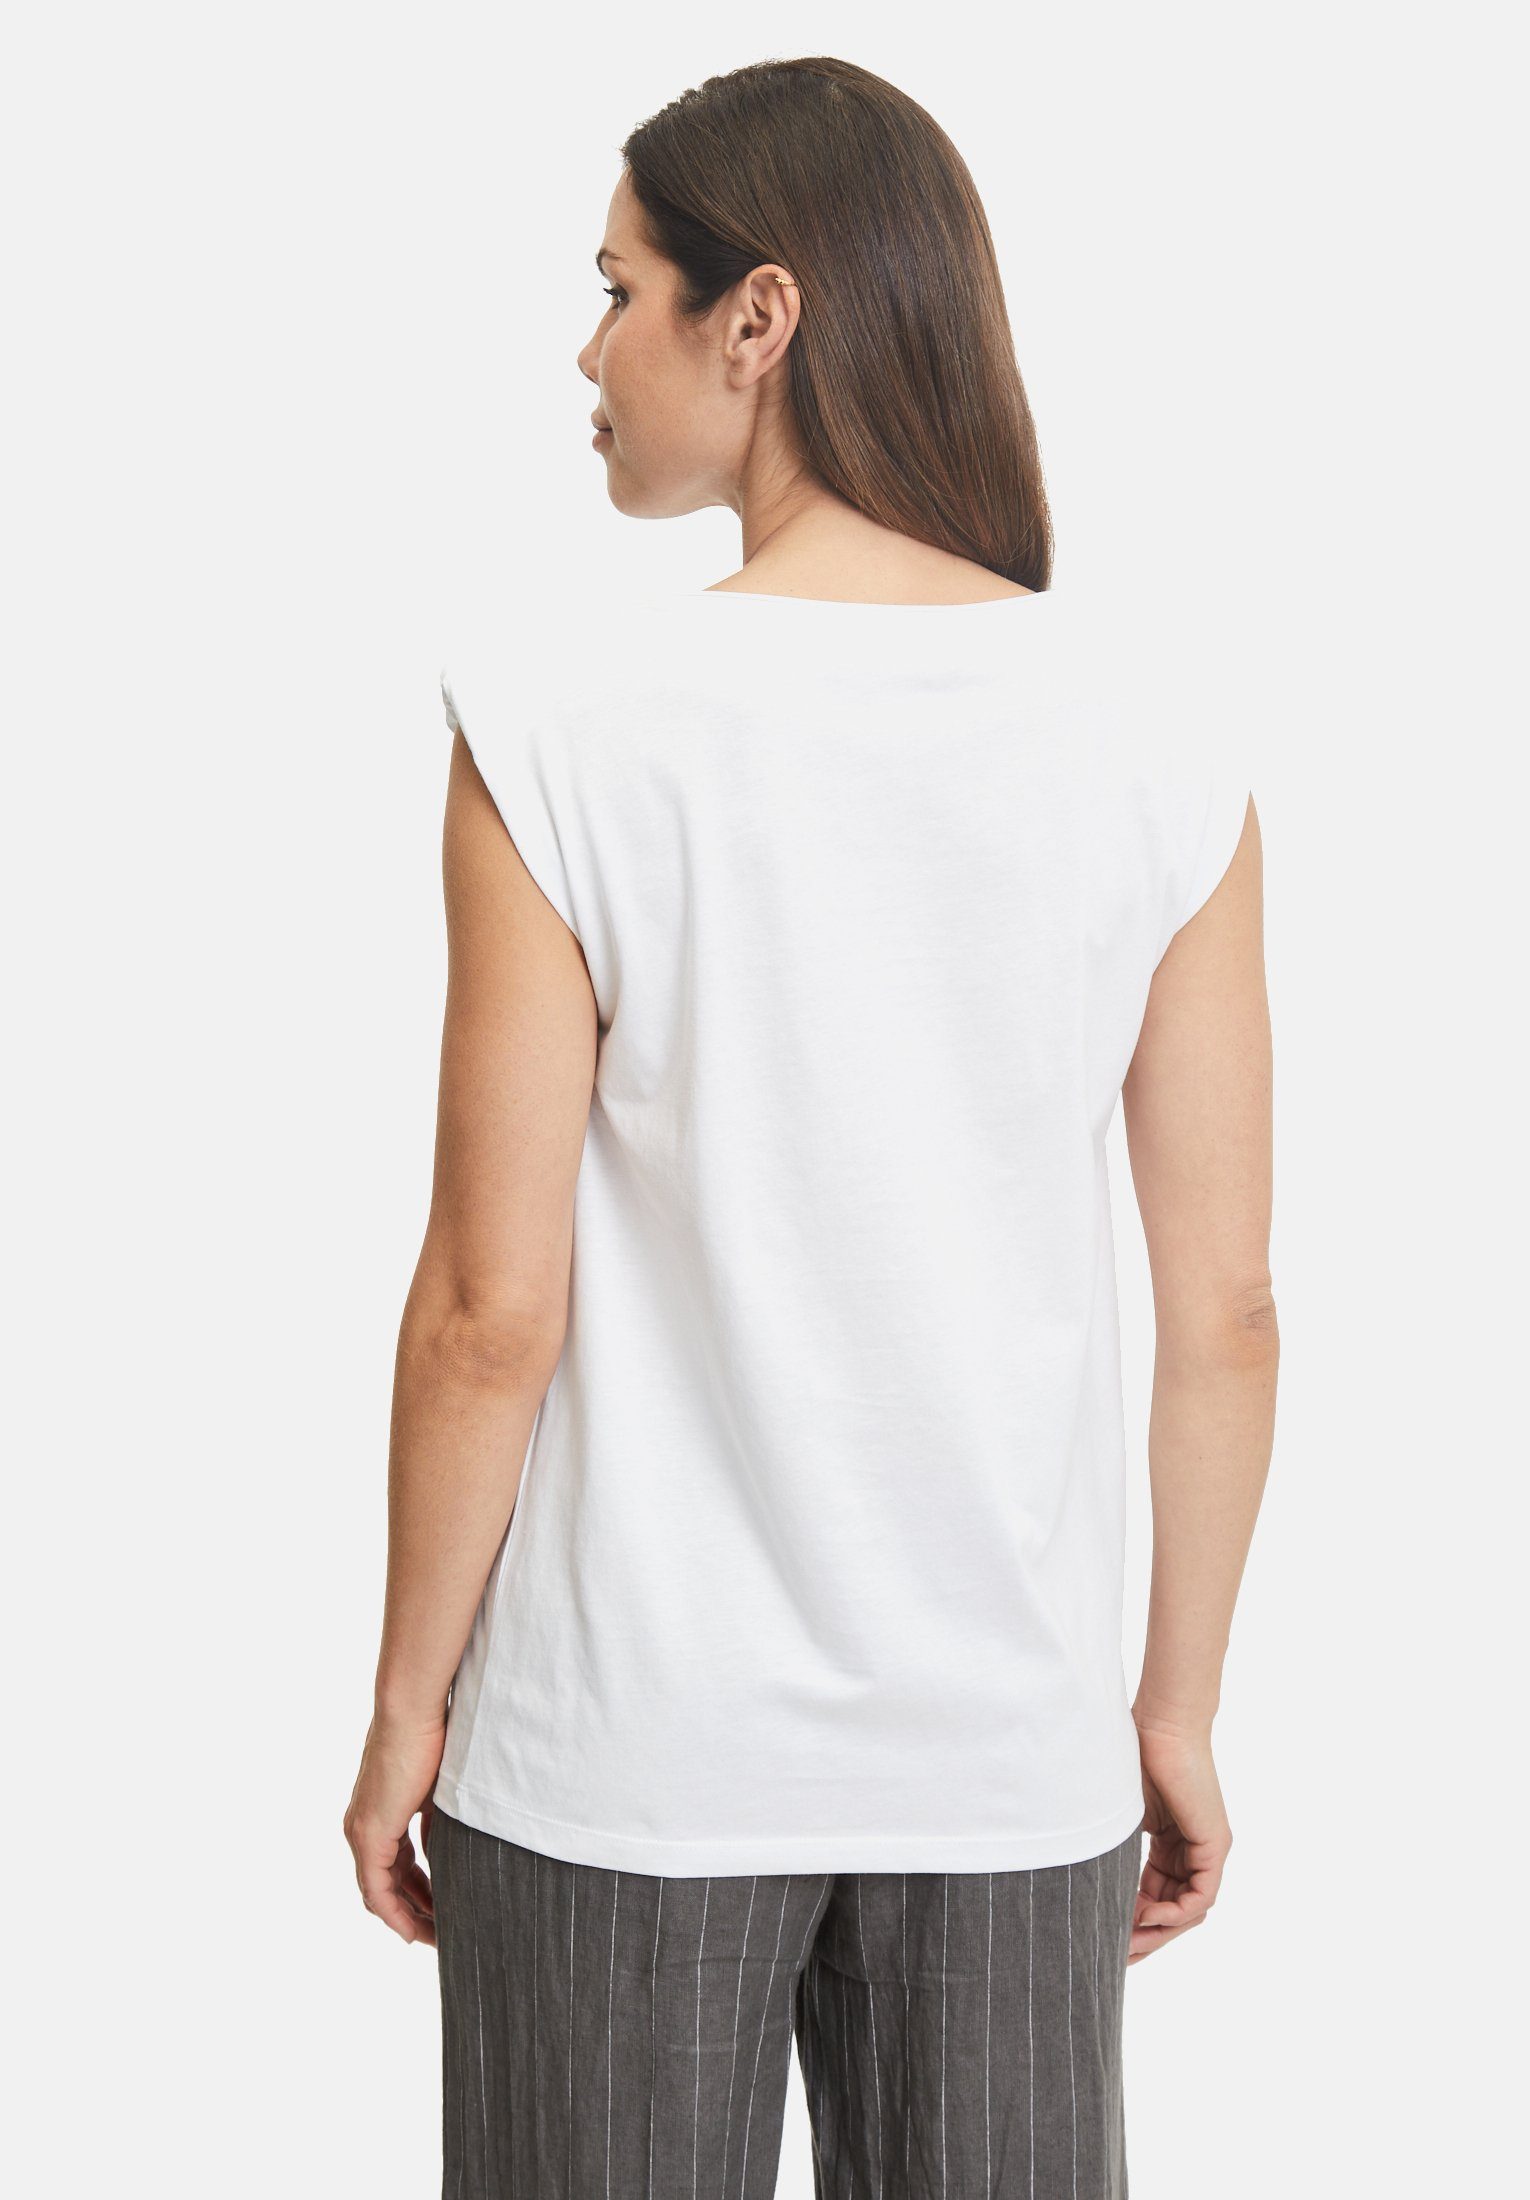 Damen Shirts Cartoon T-Shirt ohne Arm Form